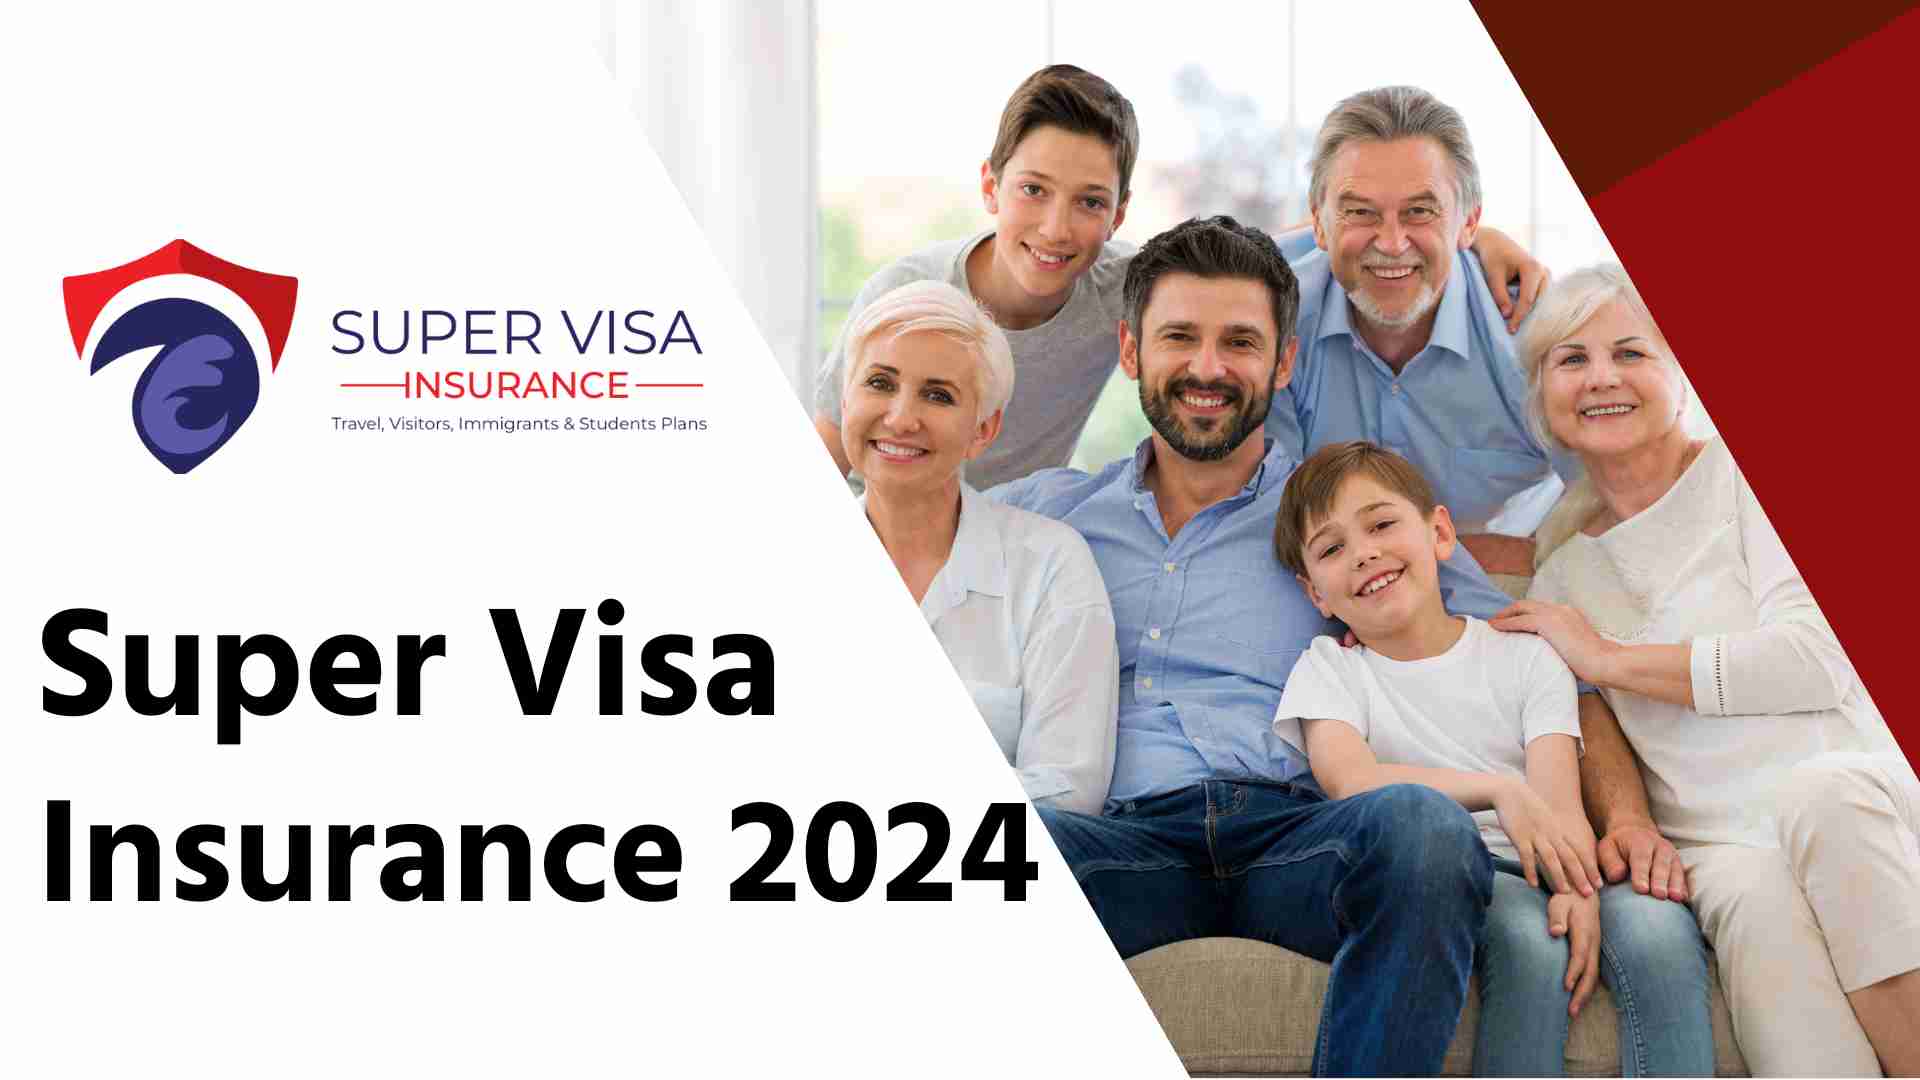 Super Visa Insurance: Travel Medical Insurance for Visit to Canada!